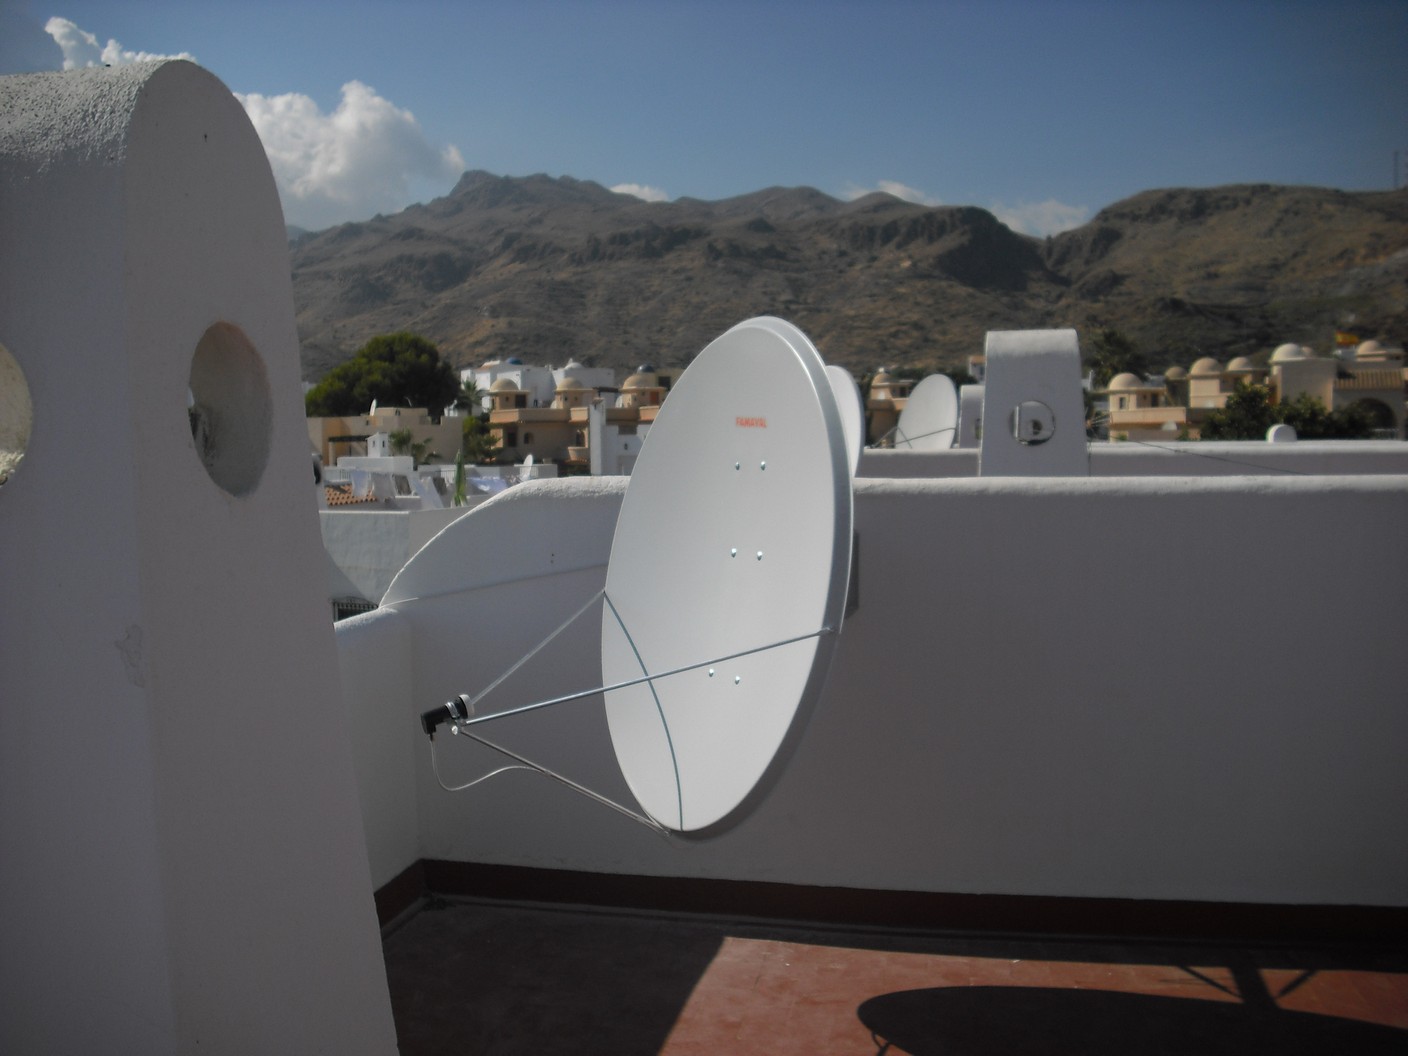 sky tv installers satellite dishes sky cards in spain costa blanca madrid marbella malaga5